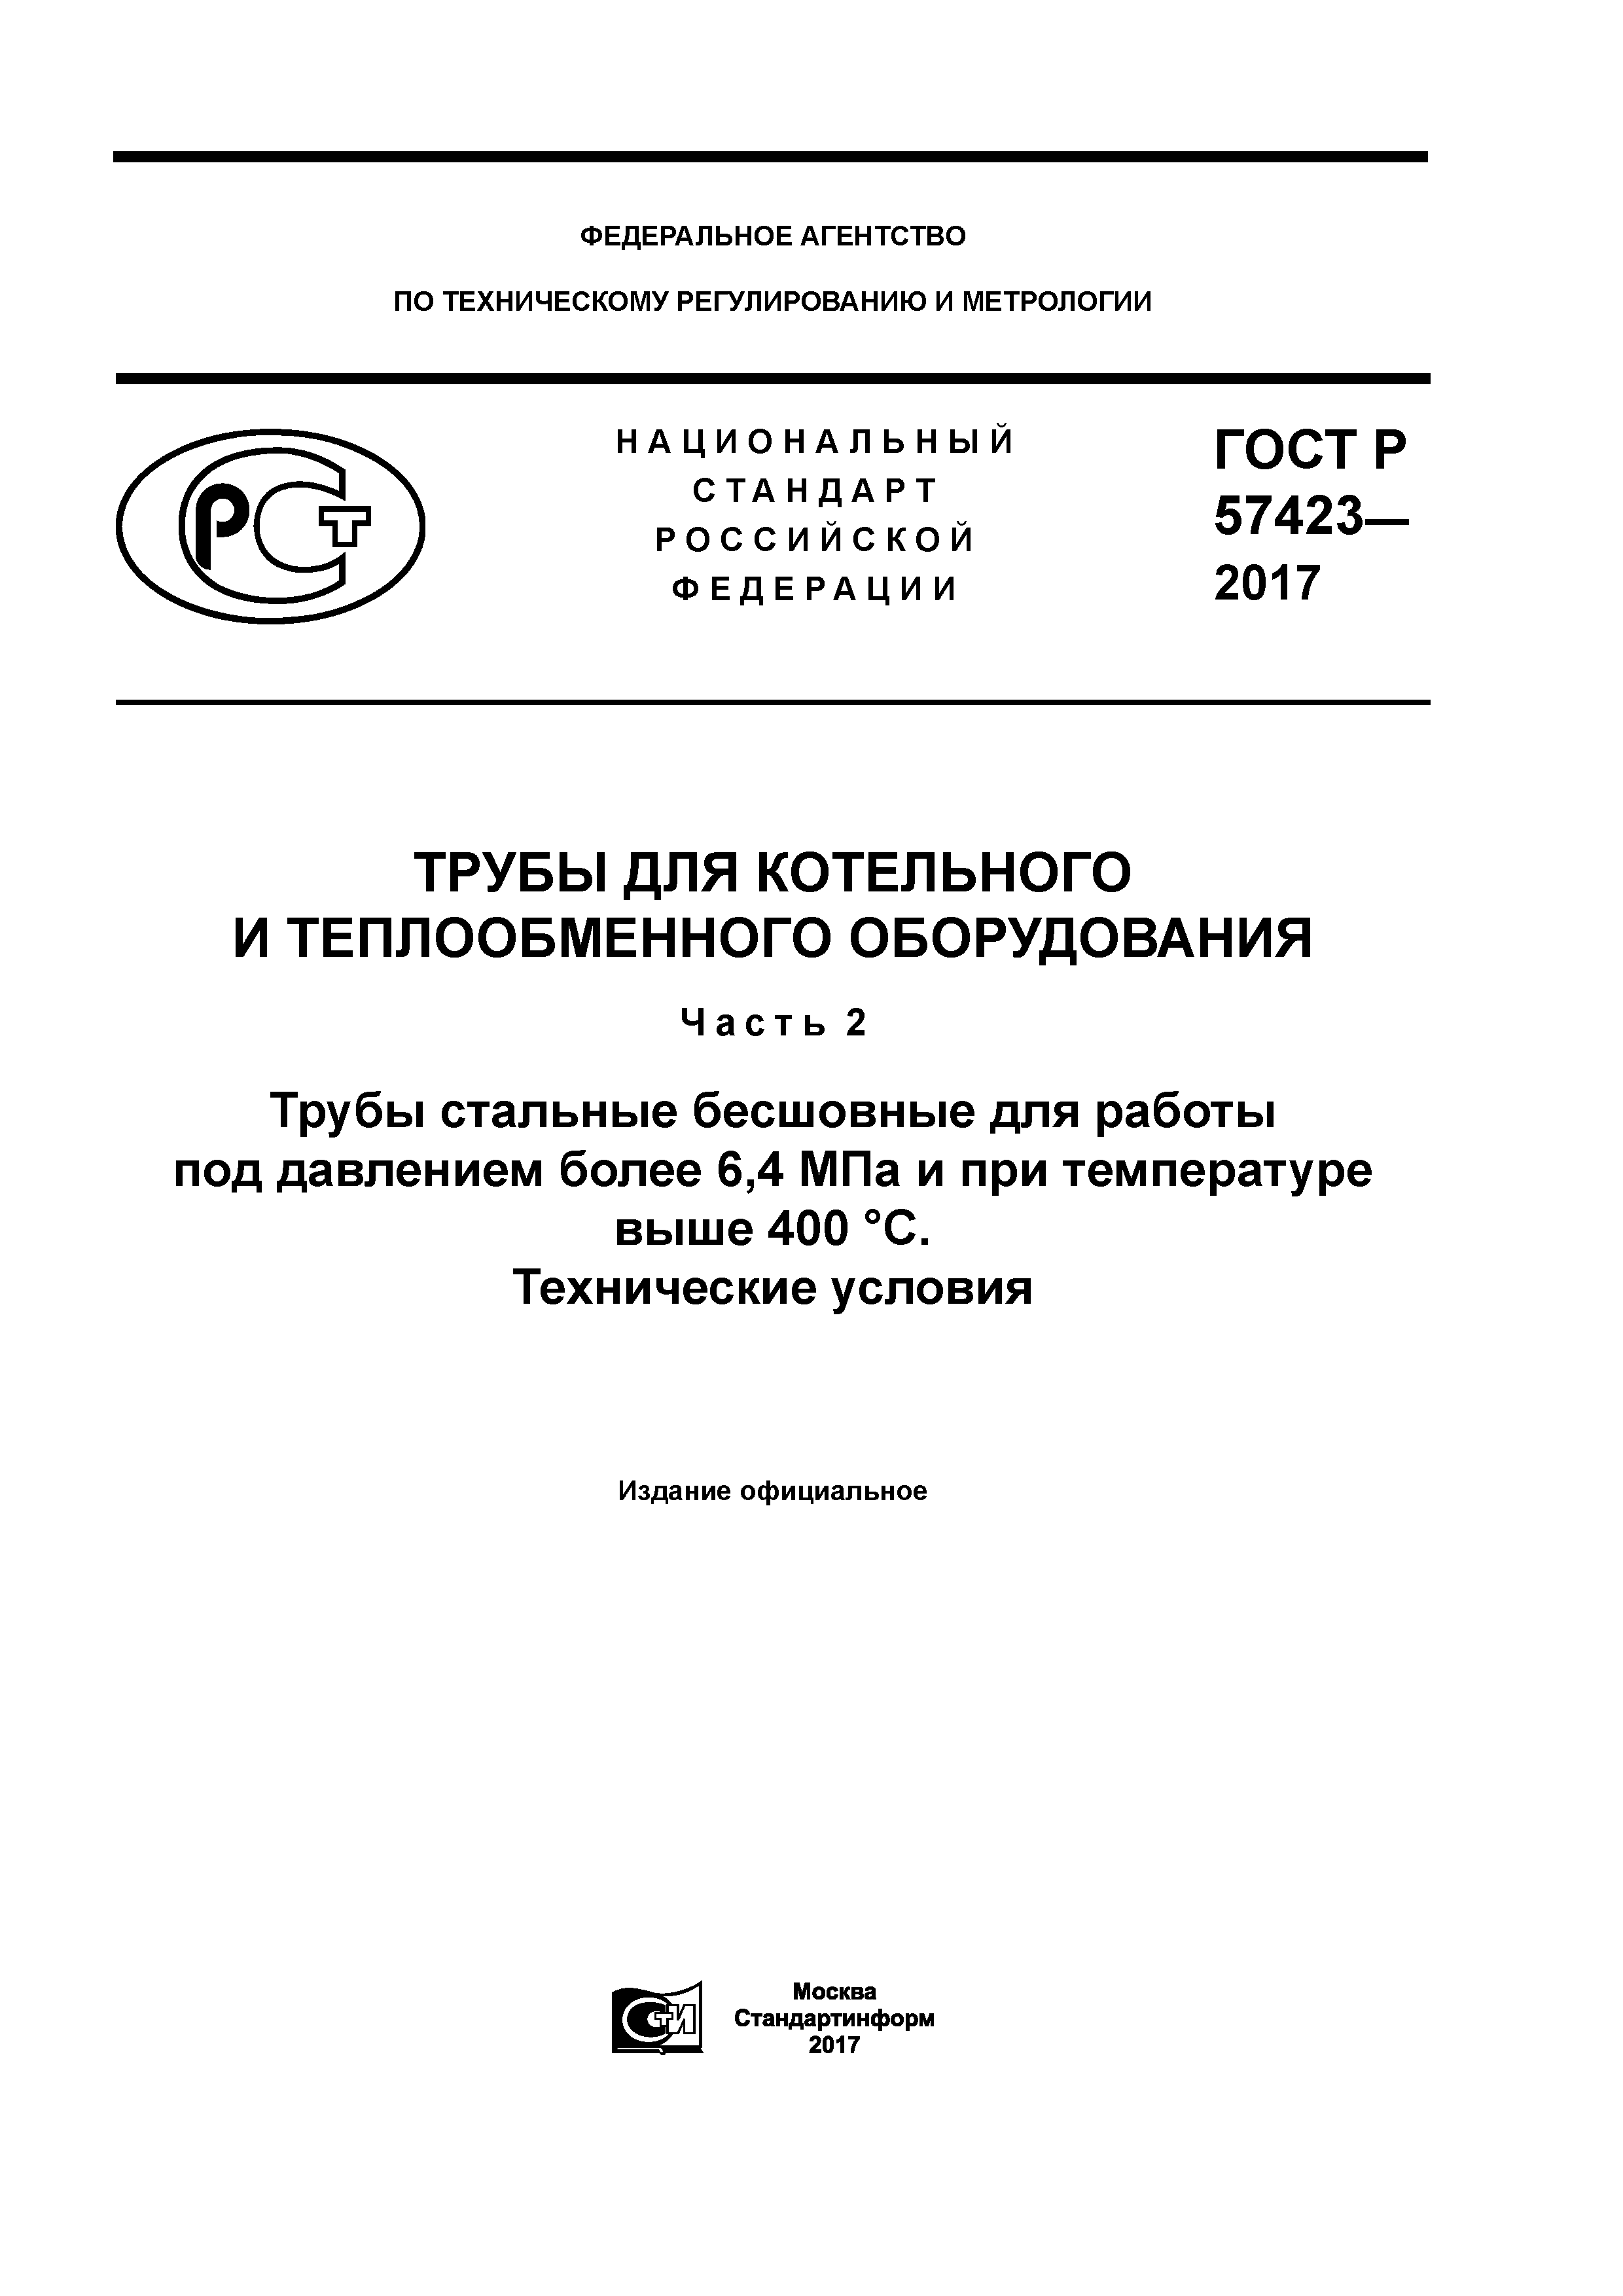 ГОСТ Р 57423-2017